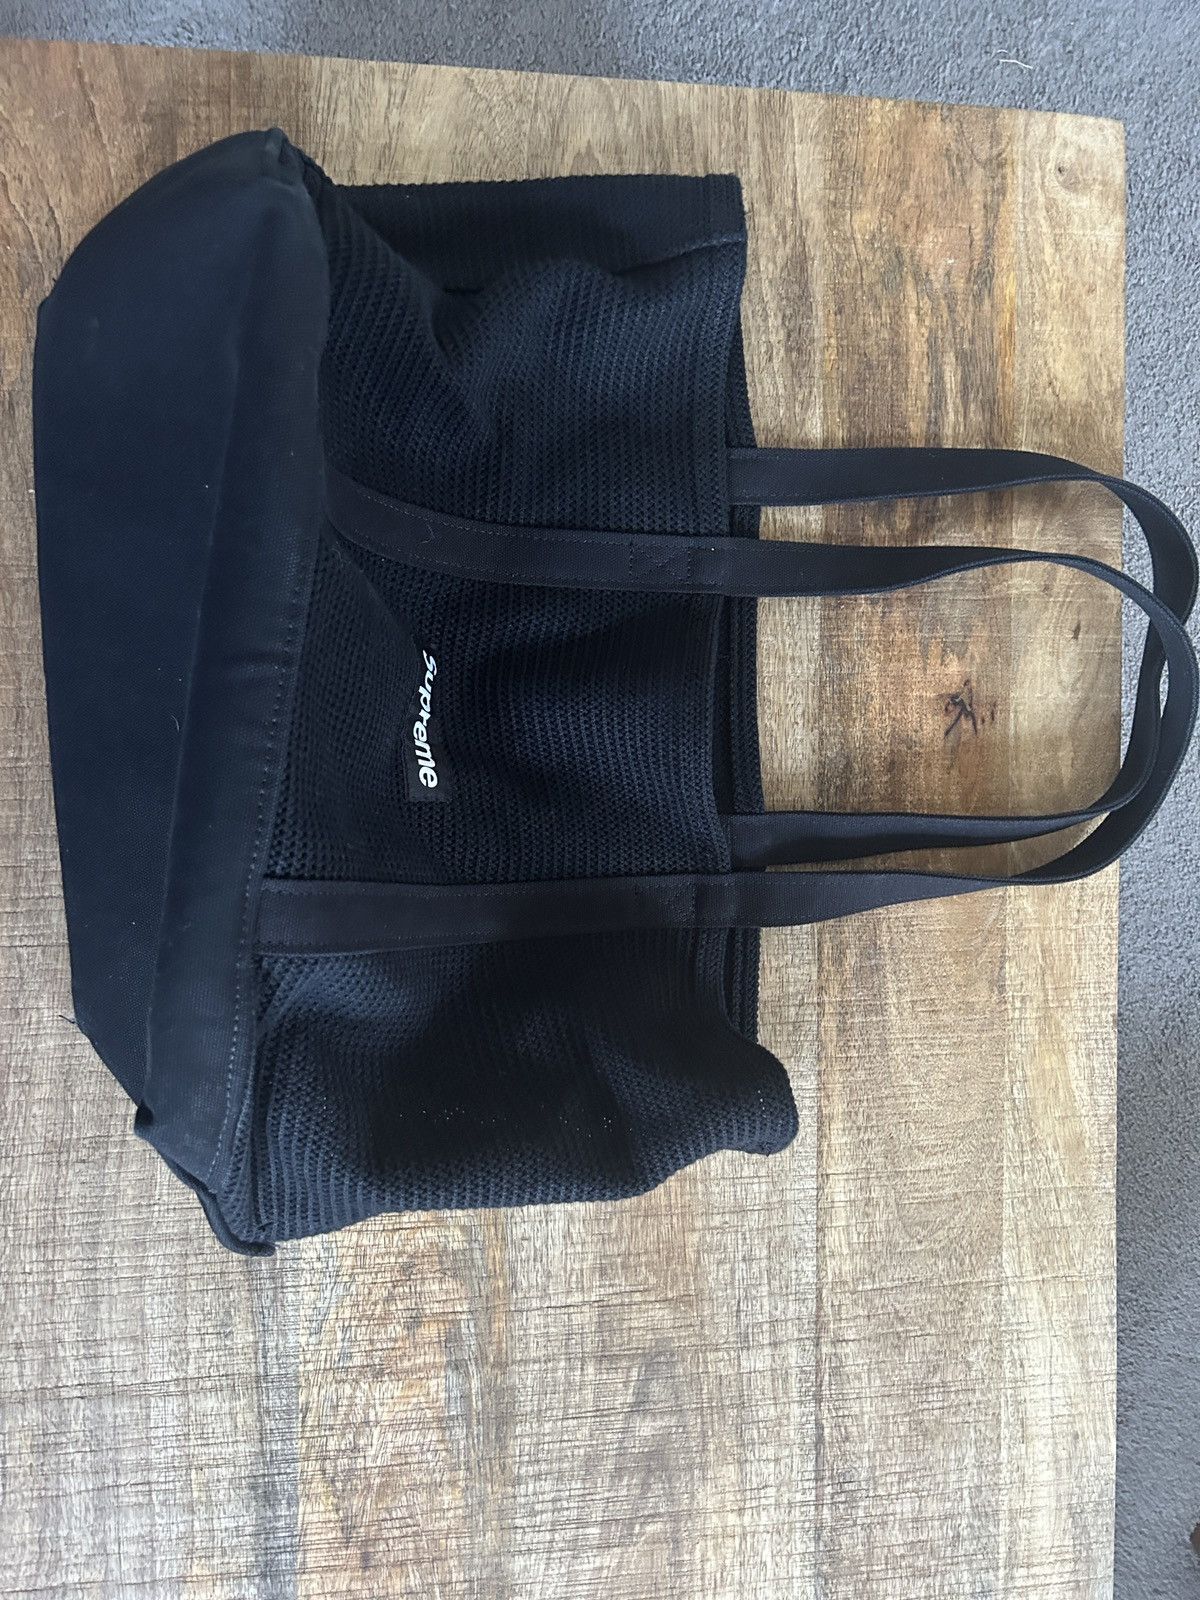 Supreme Supreme string tote bag large accessory travel SS21 black | Grailed